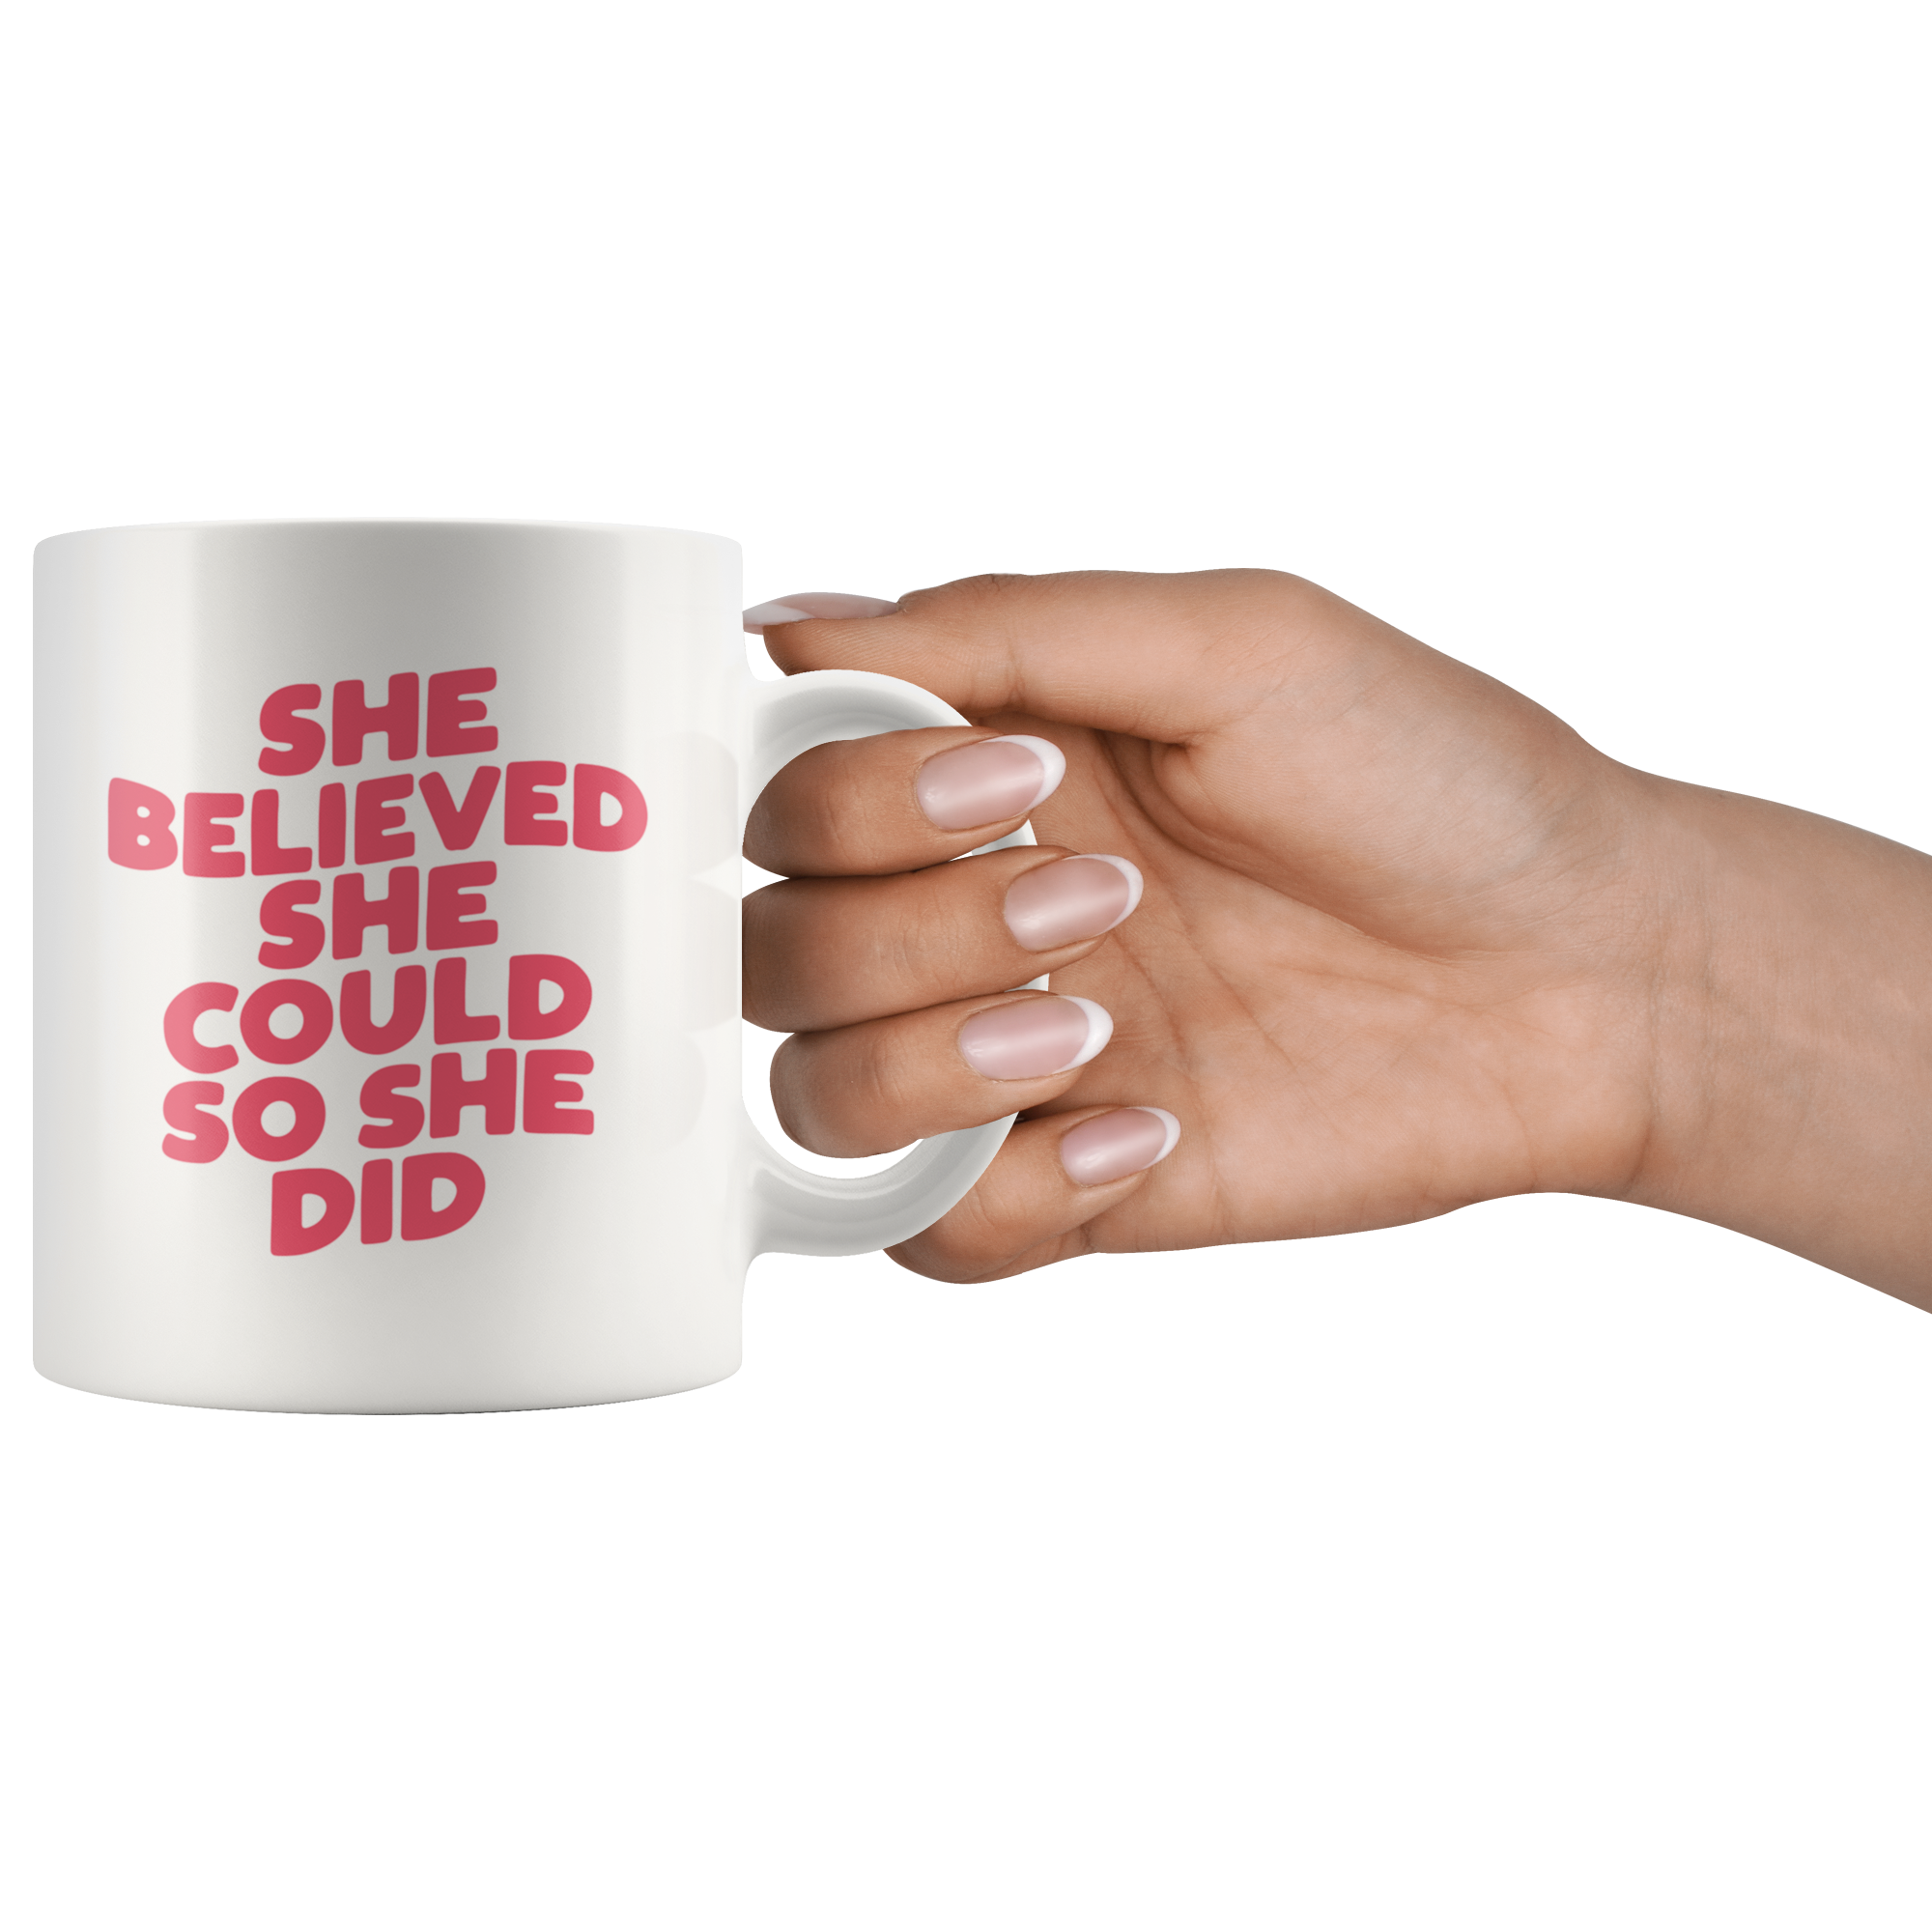 She Believed! Coffee Mug